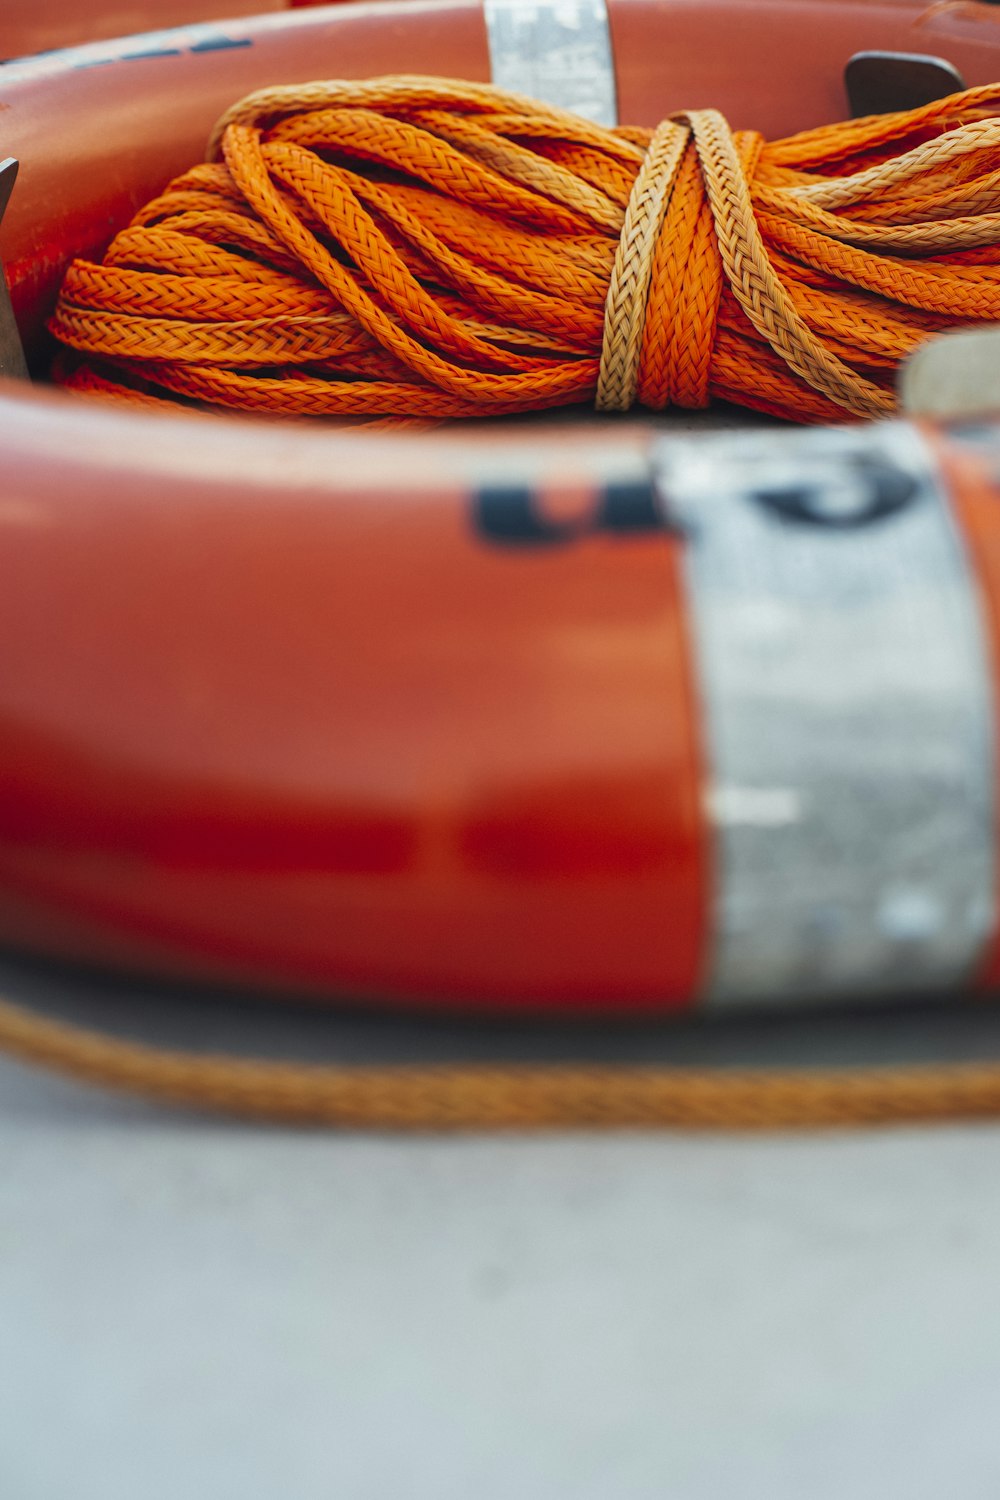 orange swim ring with rope